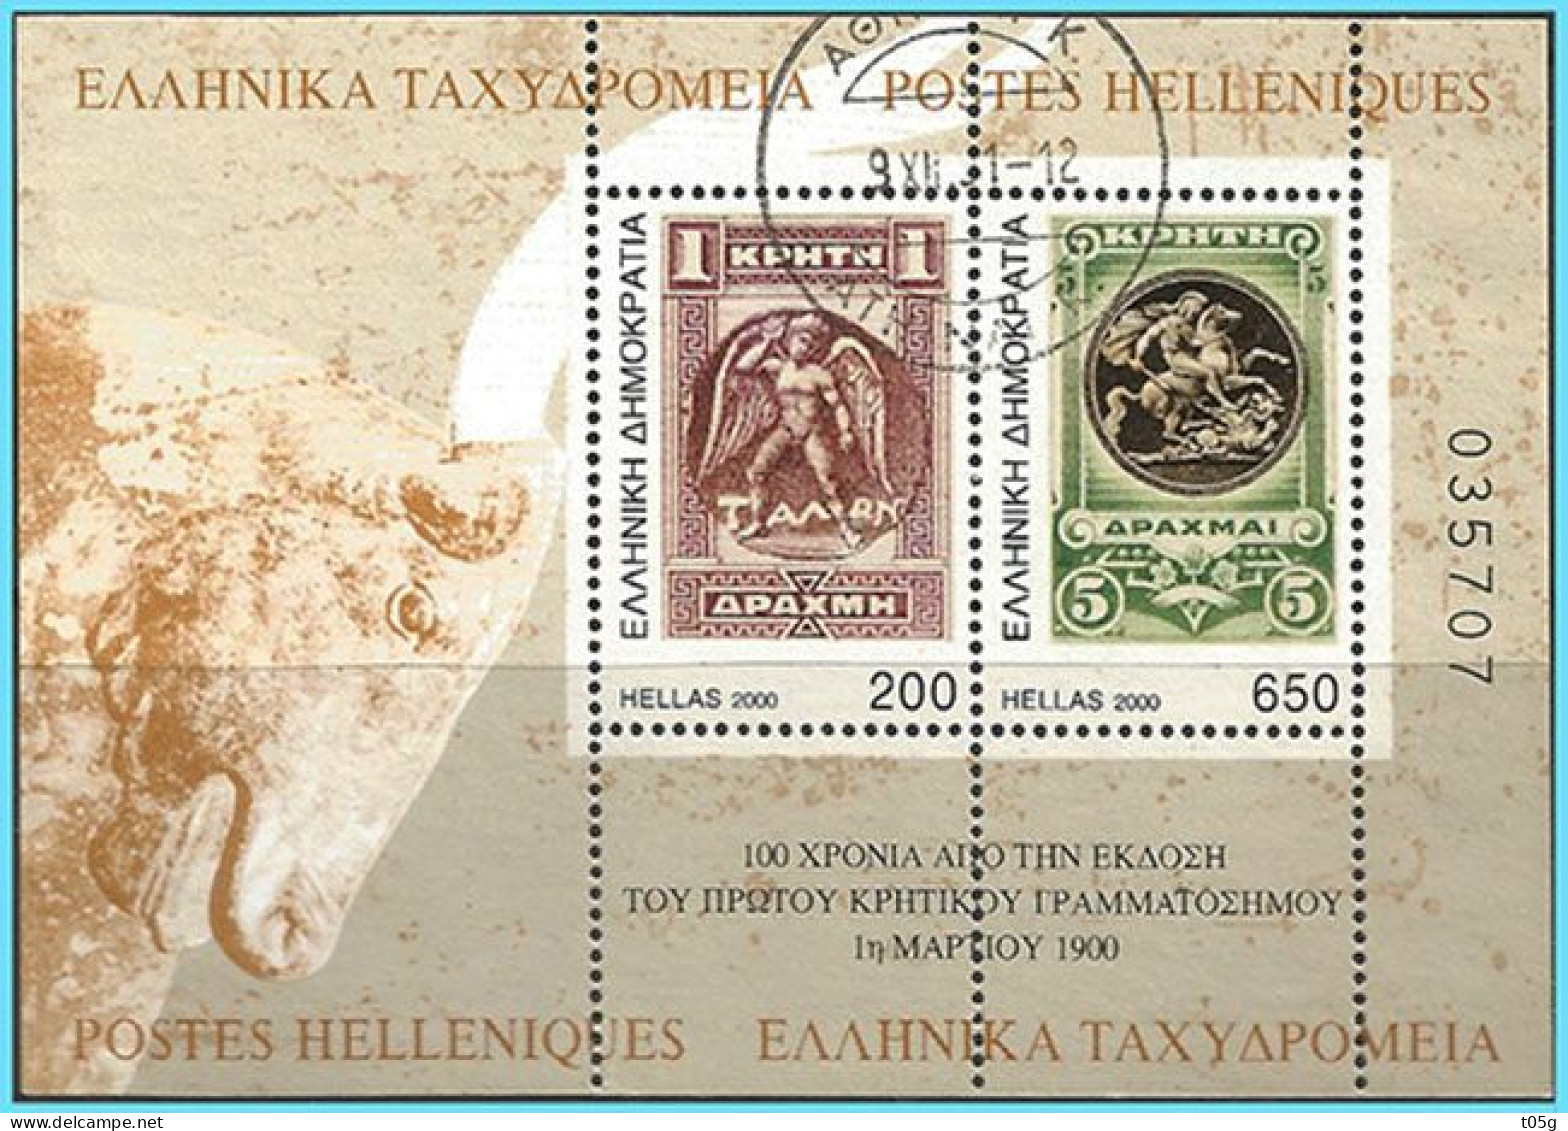 GREECE- GRECE- HELLAS 2000:  The Stamps Of Crete Miniature Sheet Used - Oblitérés